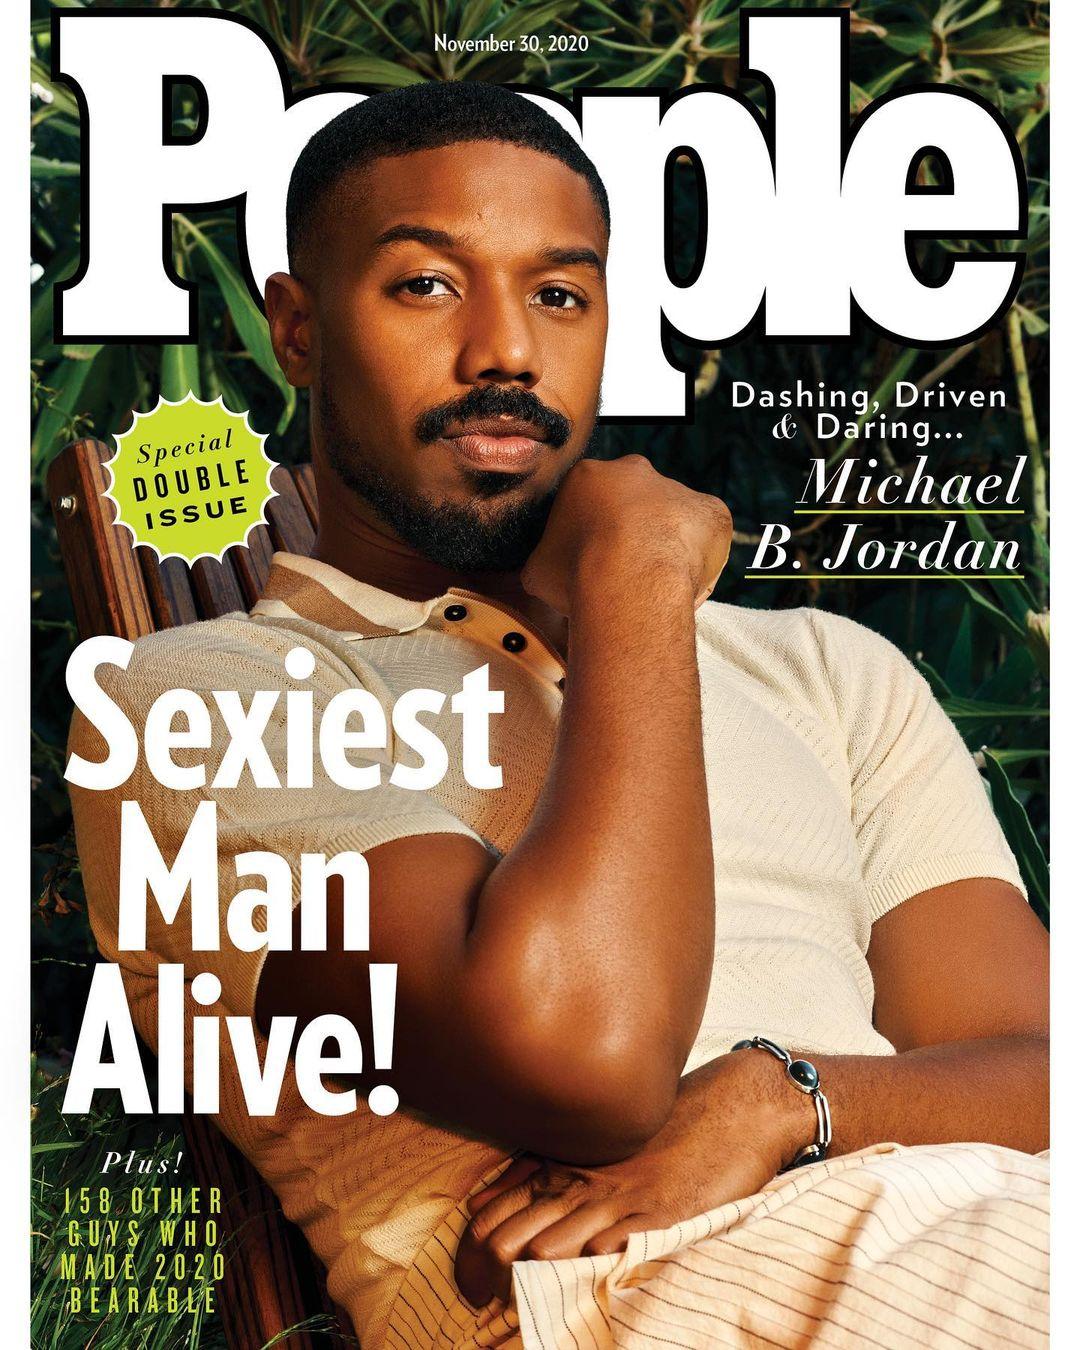 Imagem mostra michael b. Jordan na capa da revista people